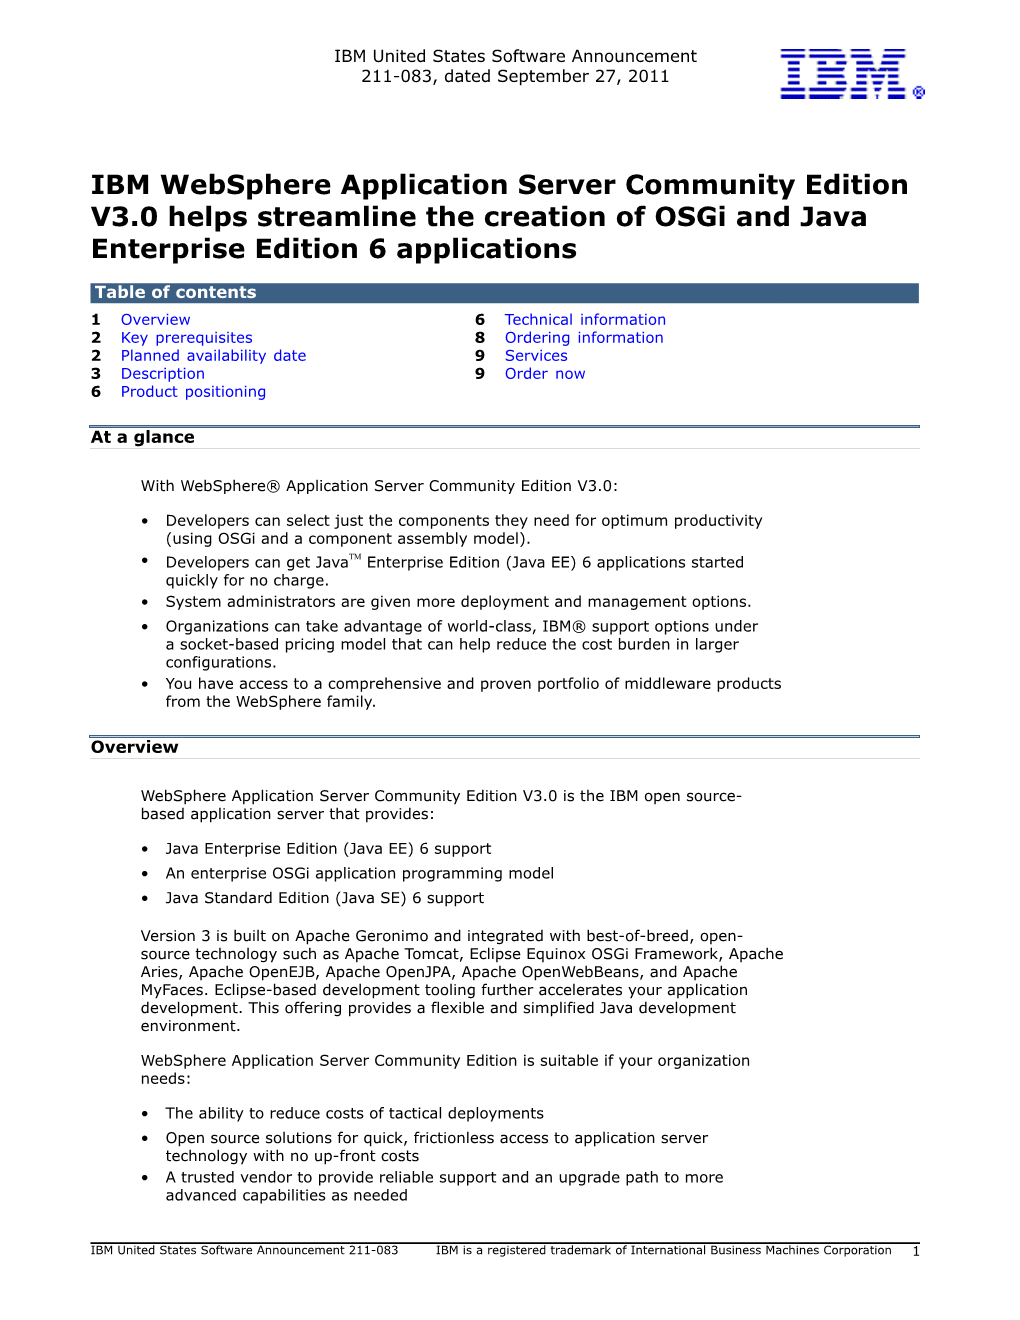 IBM Websphere Application Server Community Edition V3.0 Helps Streamline the Creation of Osgi and Java Enterprise Edition 6 Applications